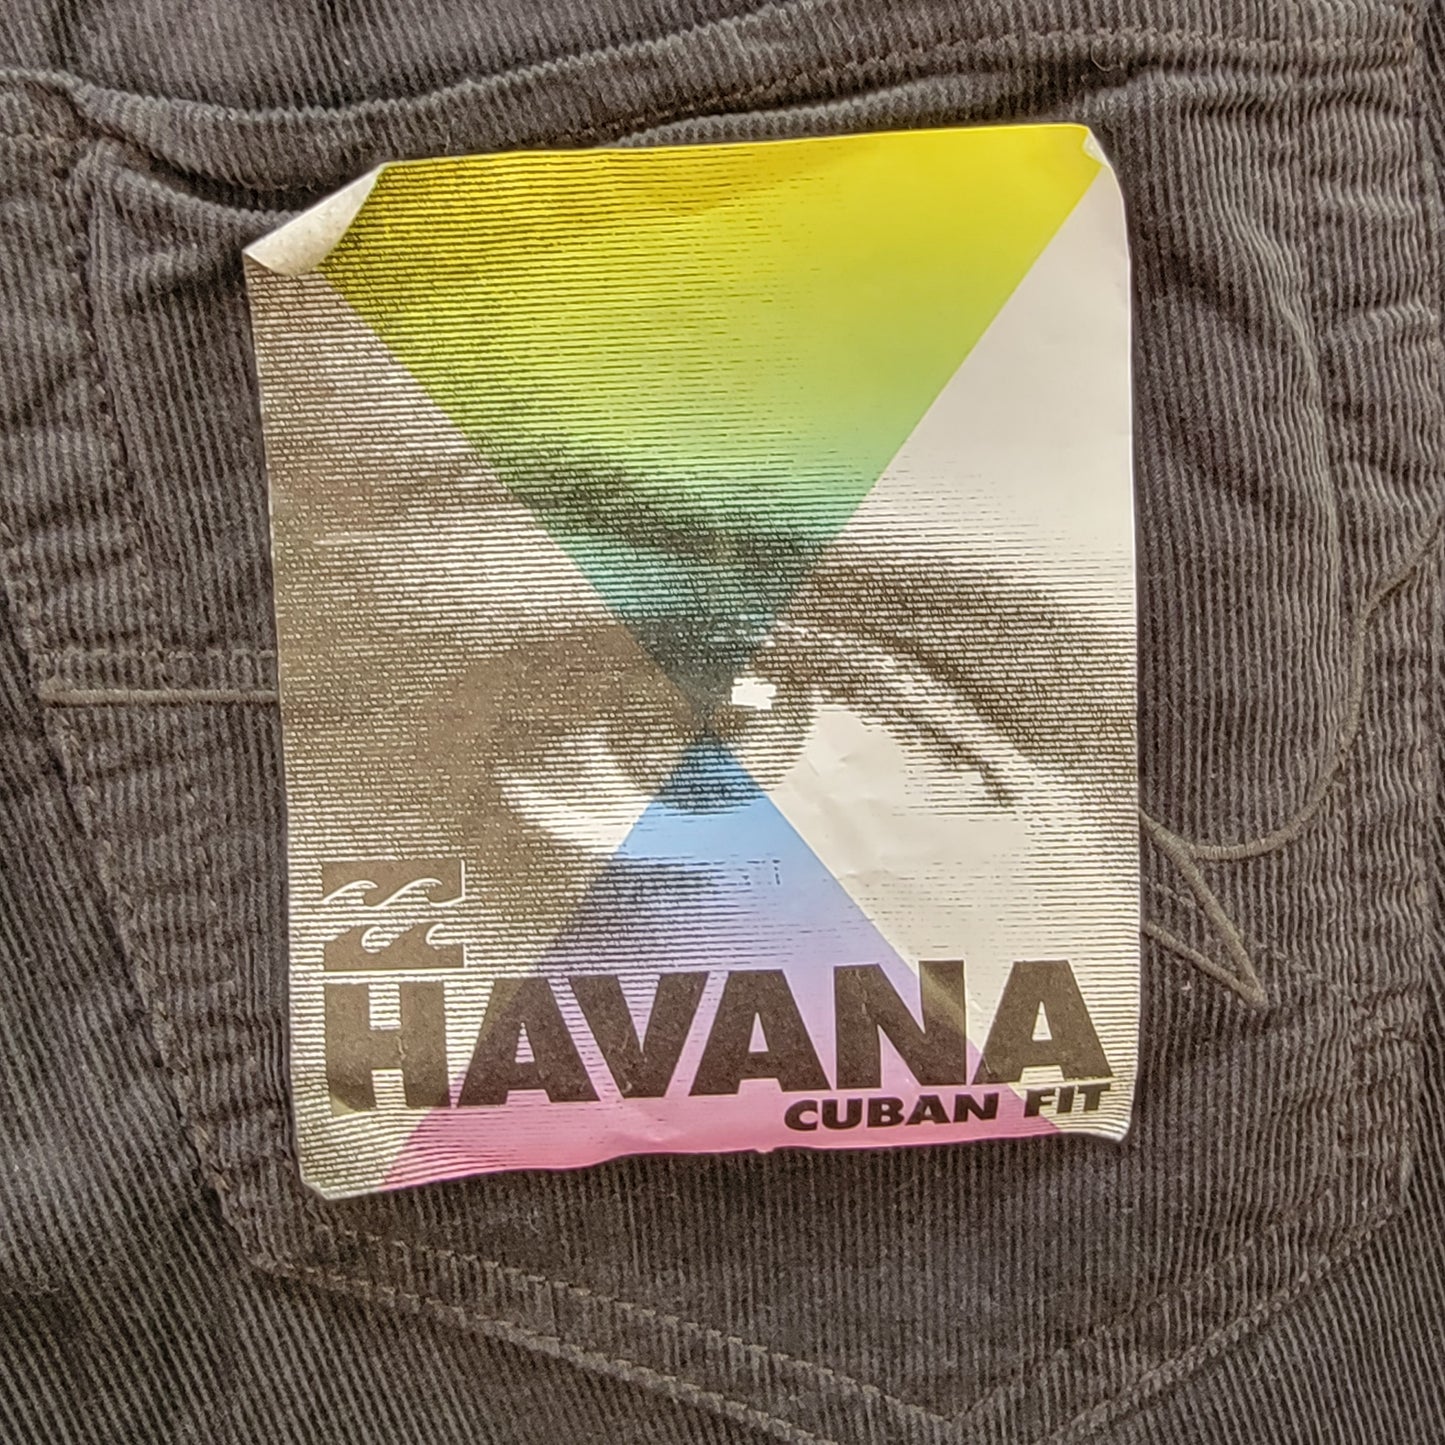 Billabong Men's Havana Cuban Fit Corduroy Gray Shorts Size Retail $49.50